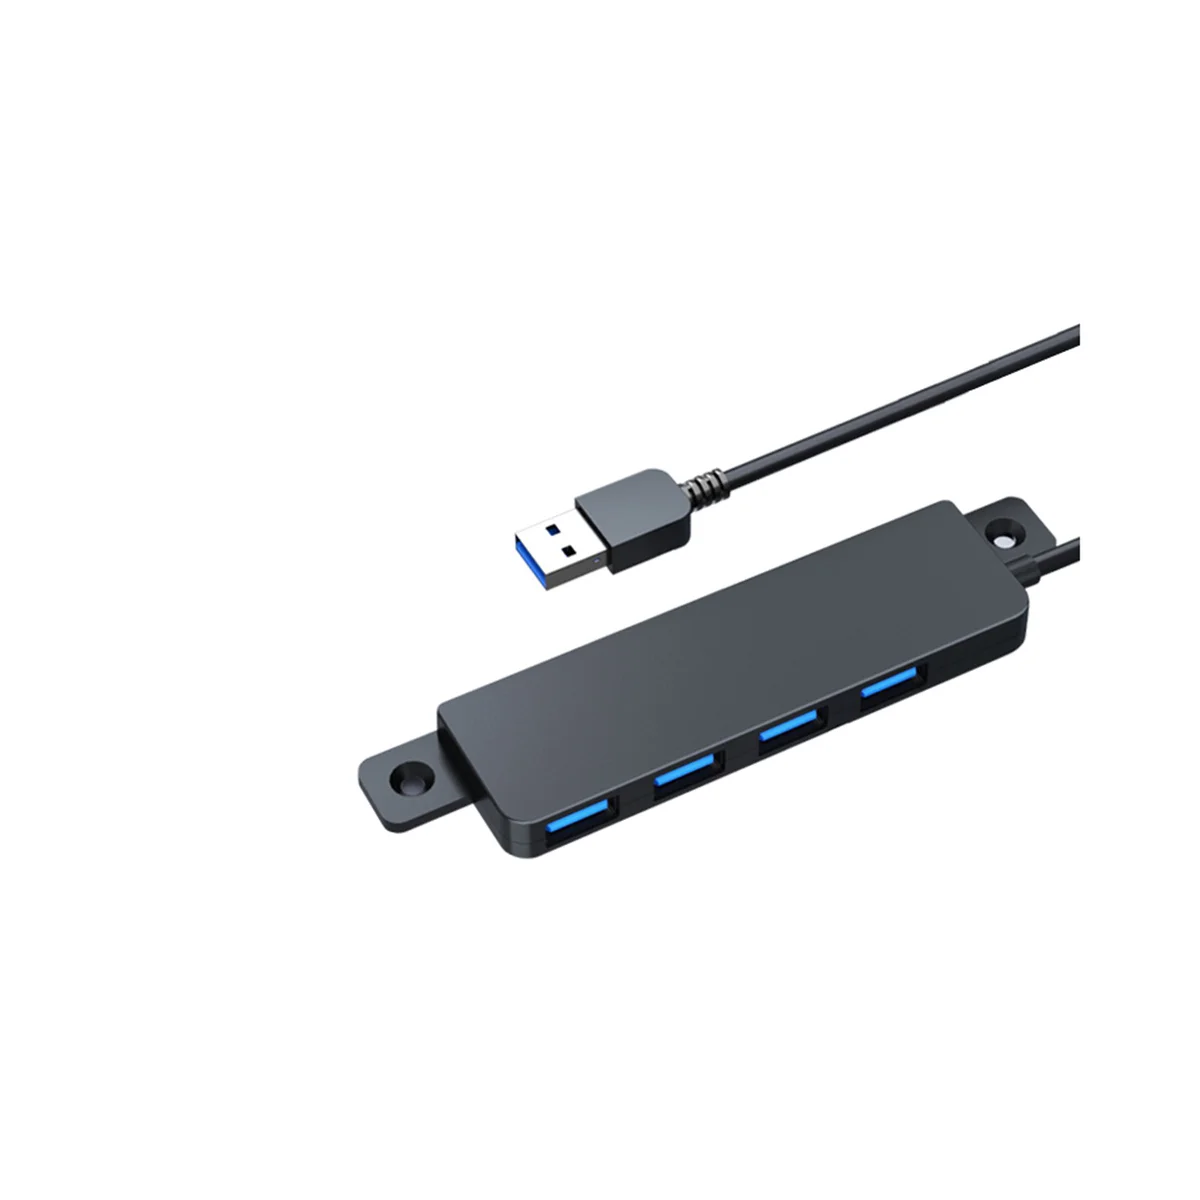 

USB Hub 3.0 Multi USB Splitter 4 USB Port 3.0 with Charge Power for Smart Phone Computer Pro PC Hub C,120Cm